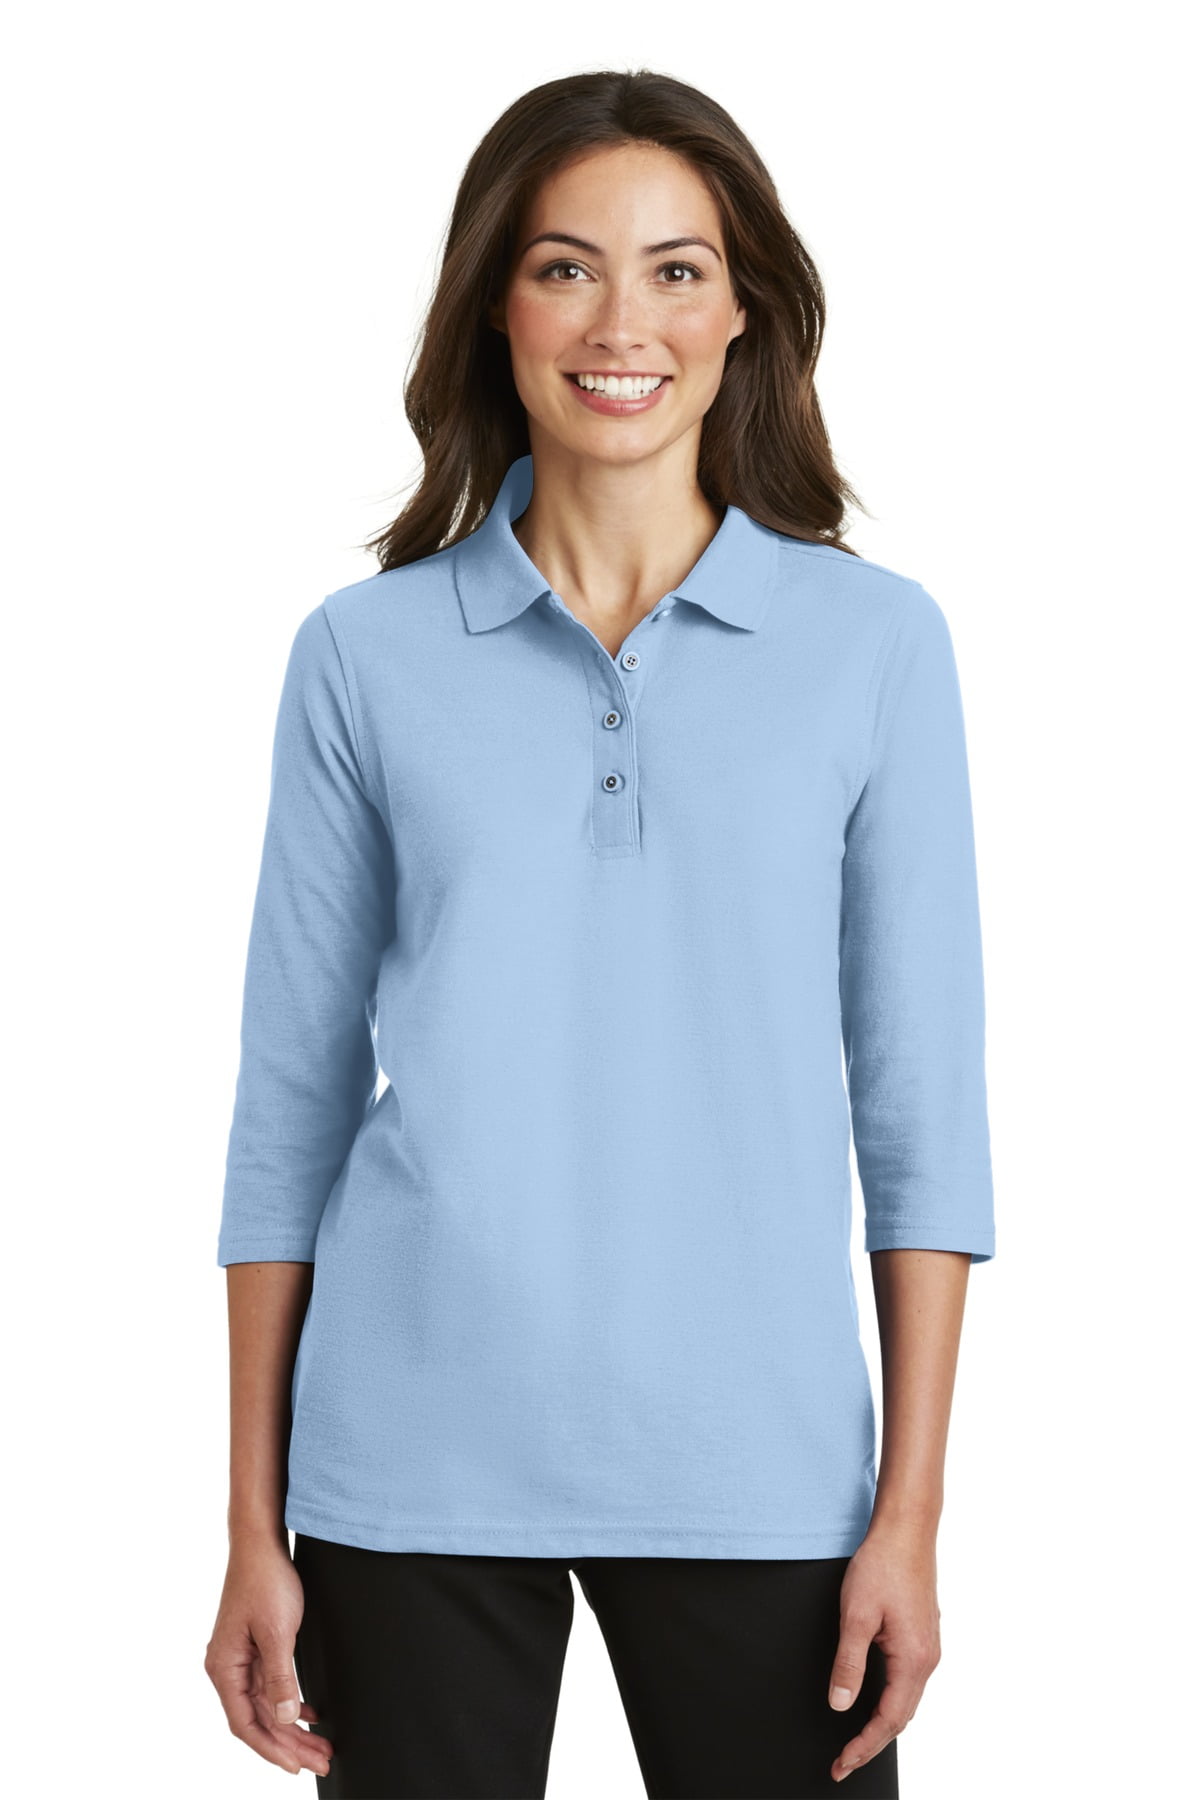 polo blouse for women